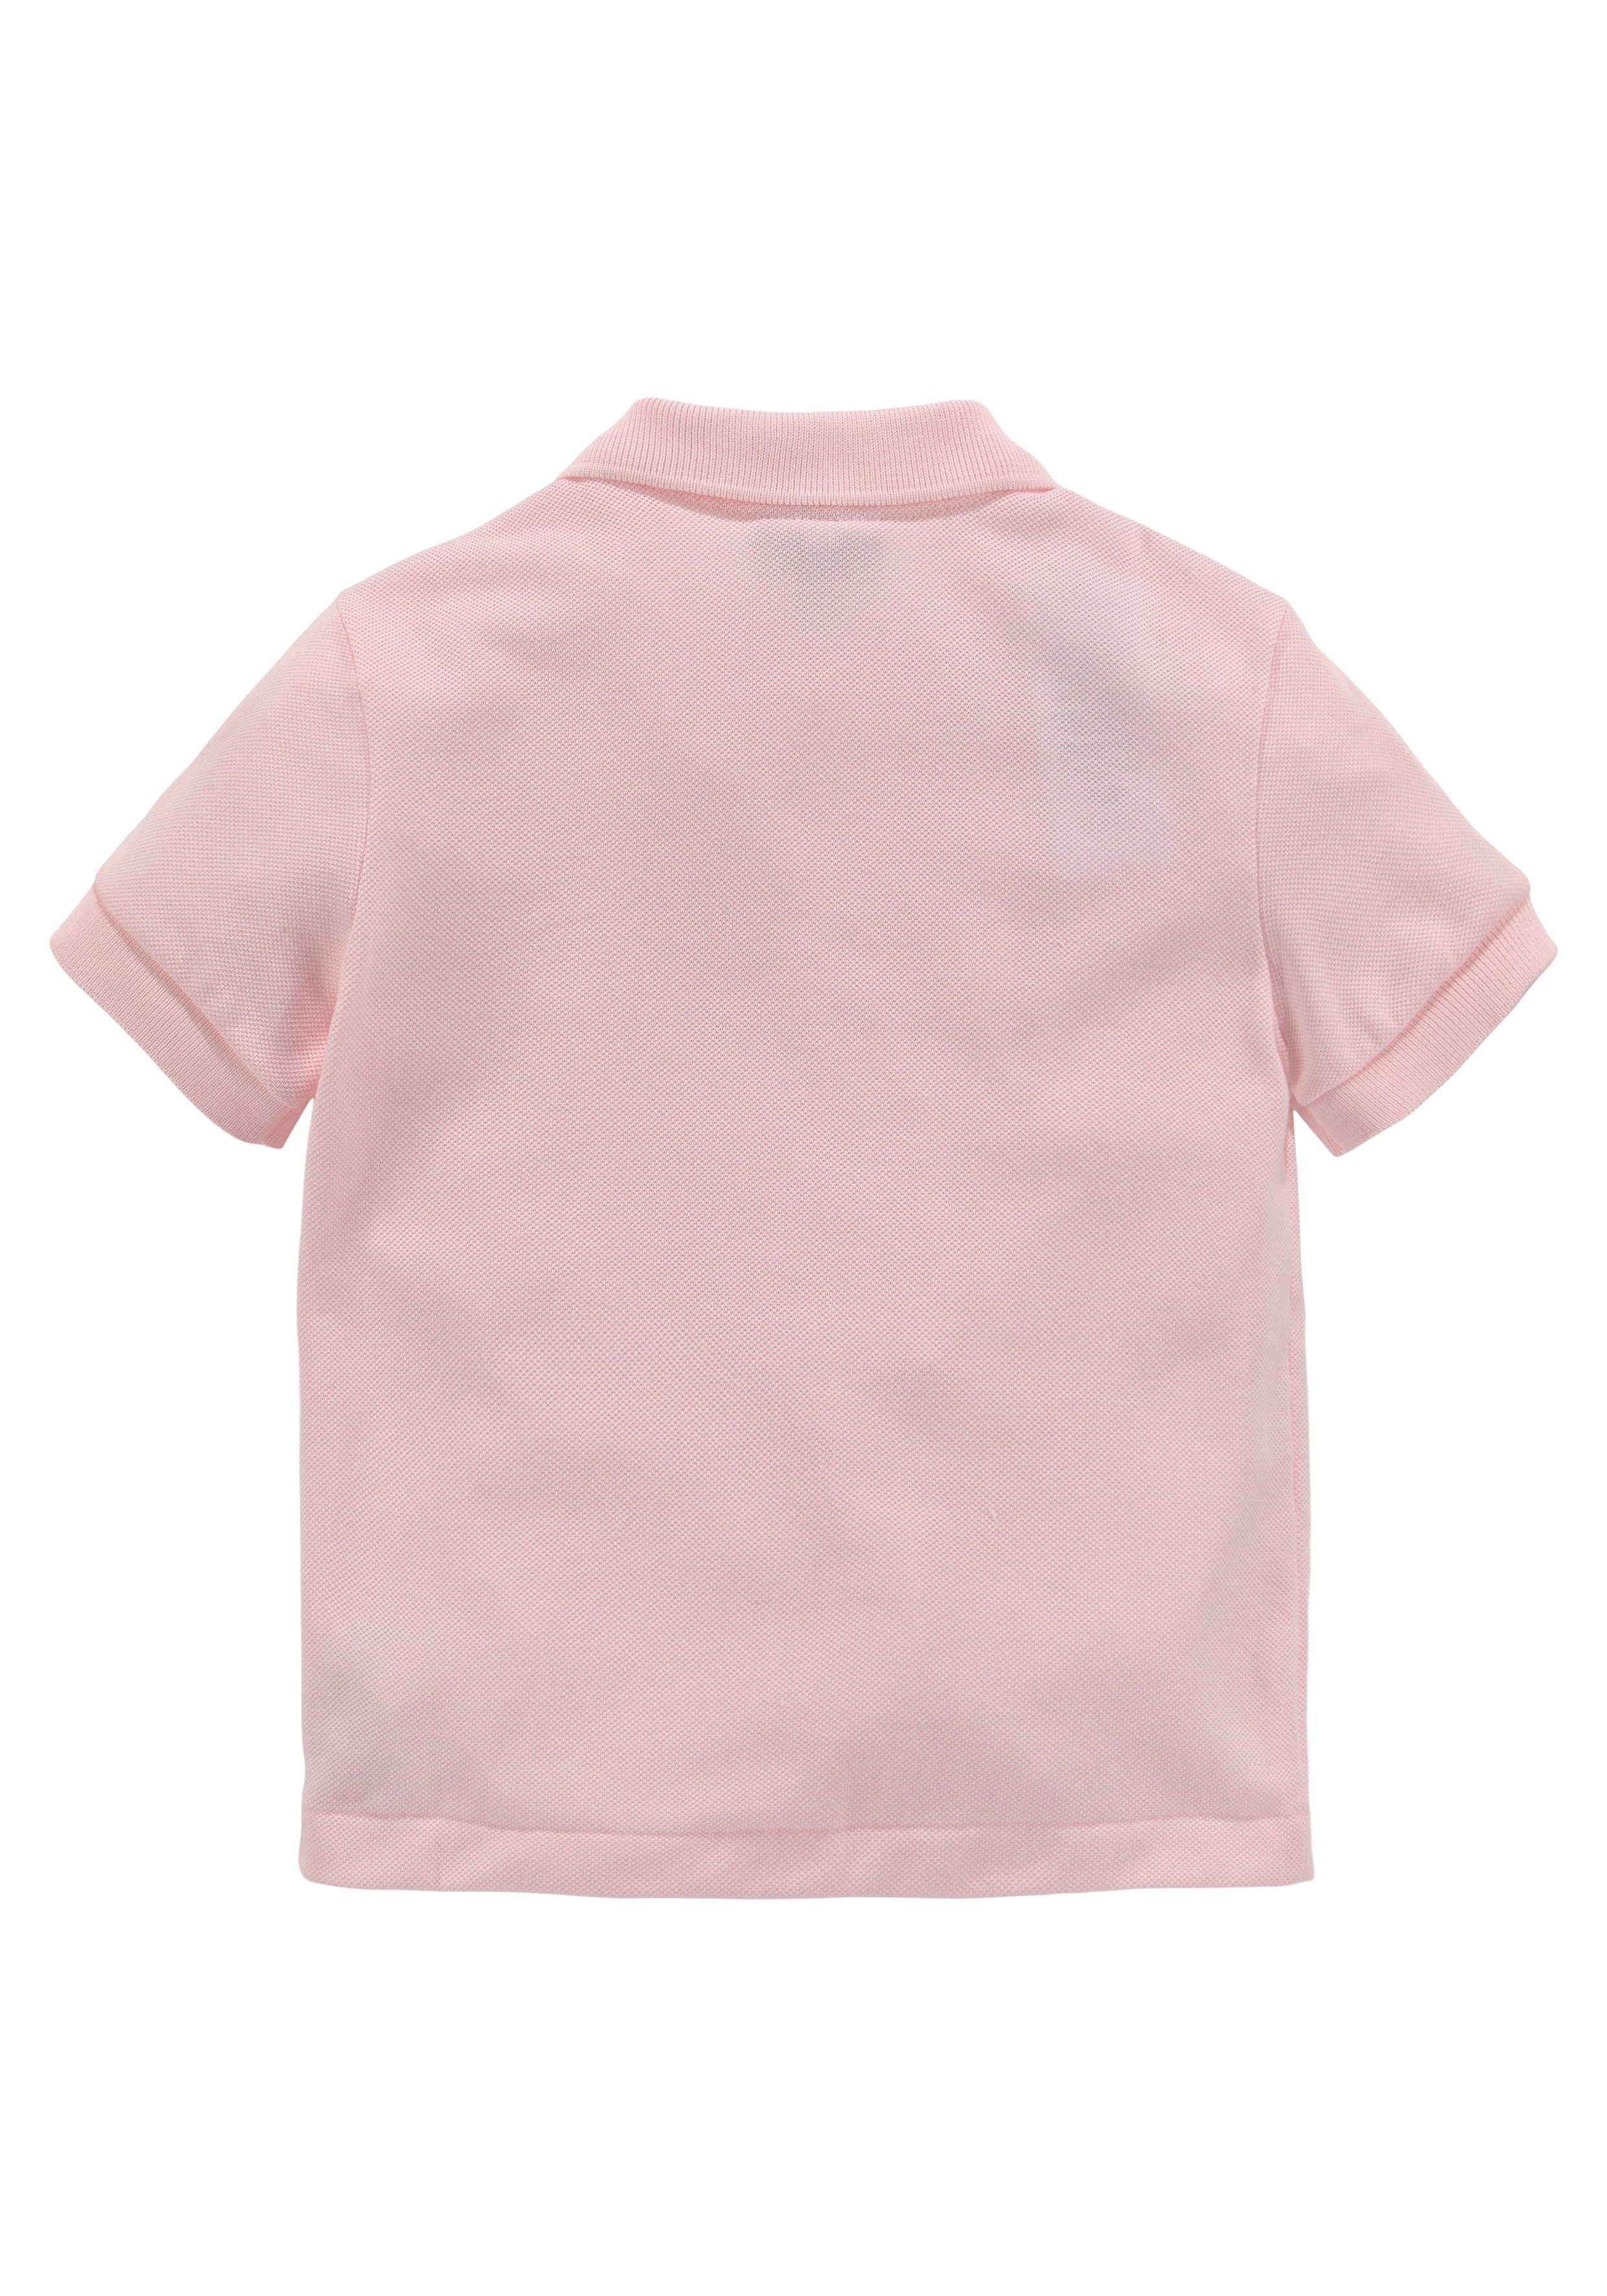 Lacoste Poloshirt aufgesticktem Junior Kids Kids mit Kinder rosa Kroko MiniMe,Junior, Polo